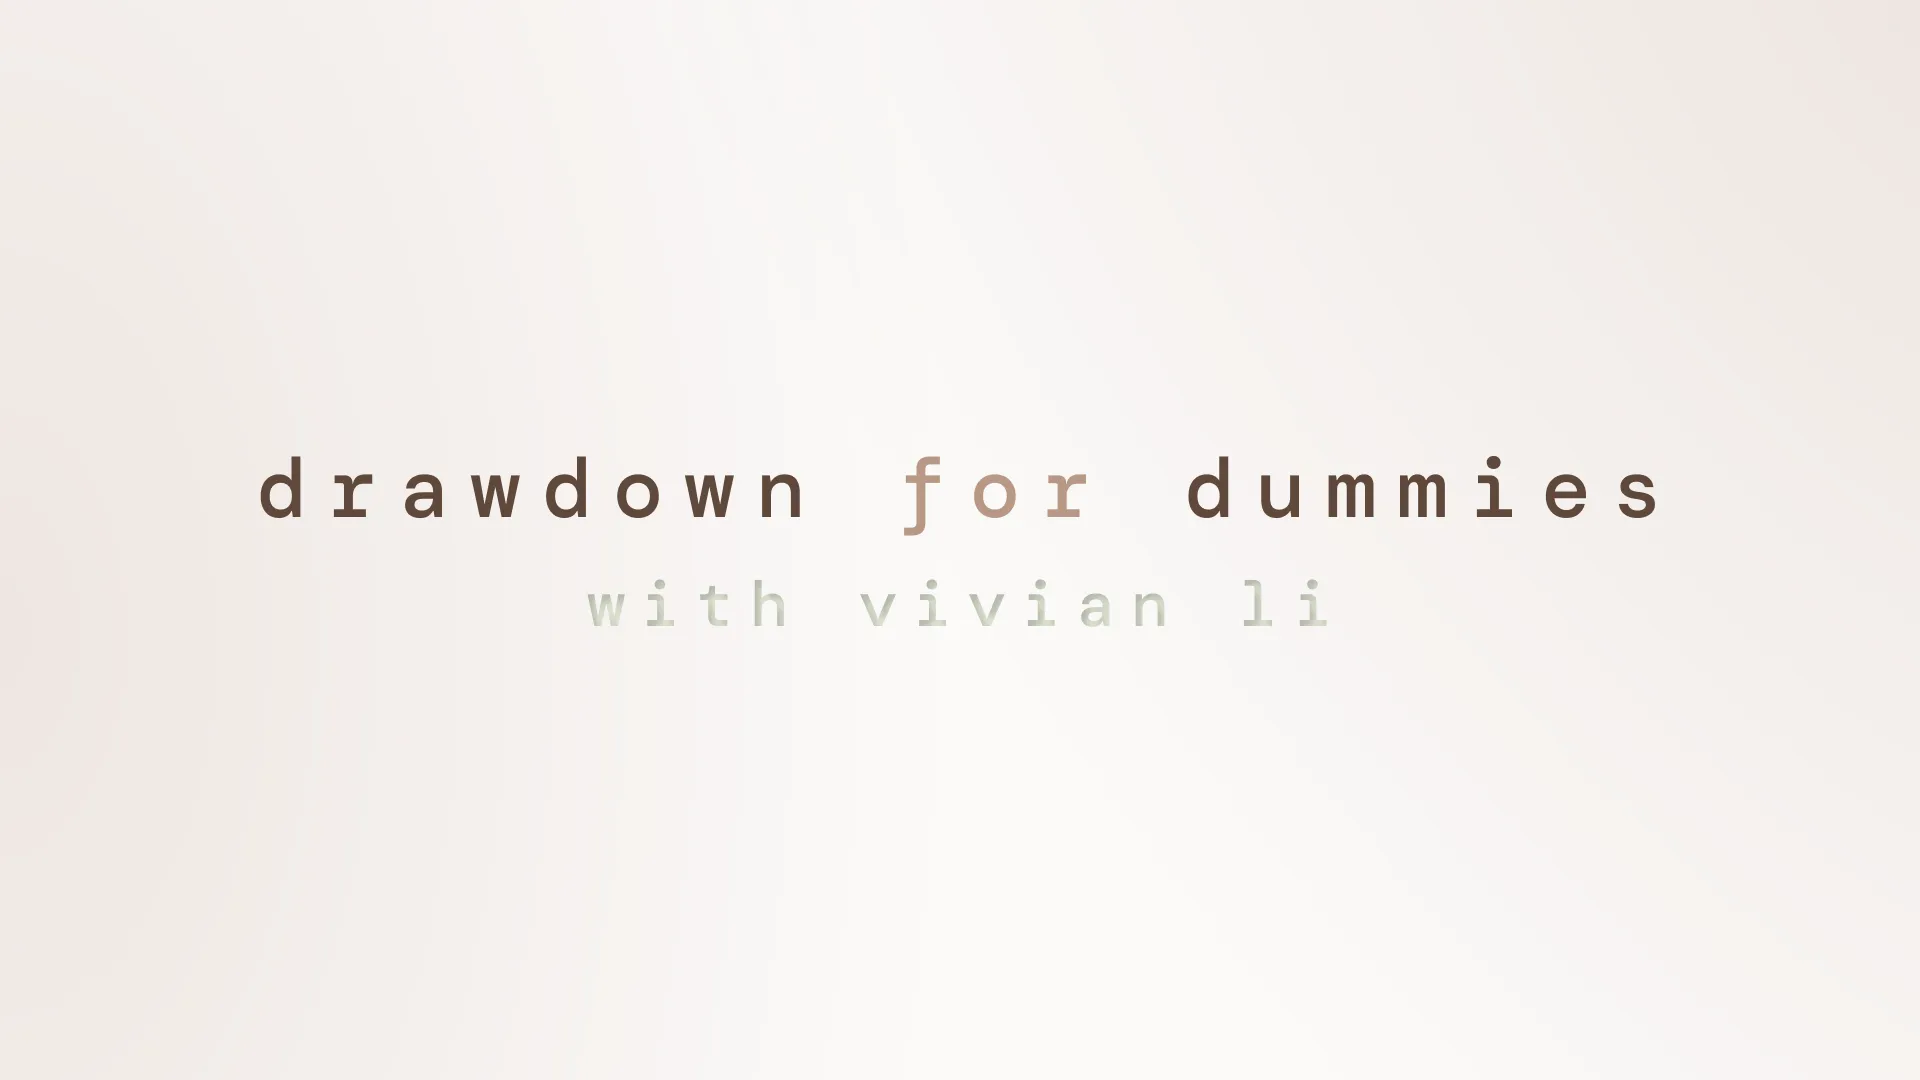 Drawdown for dummies ep. 1